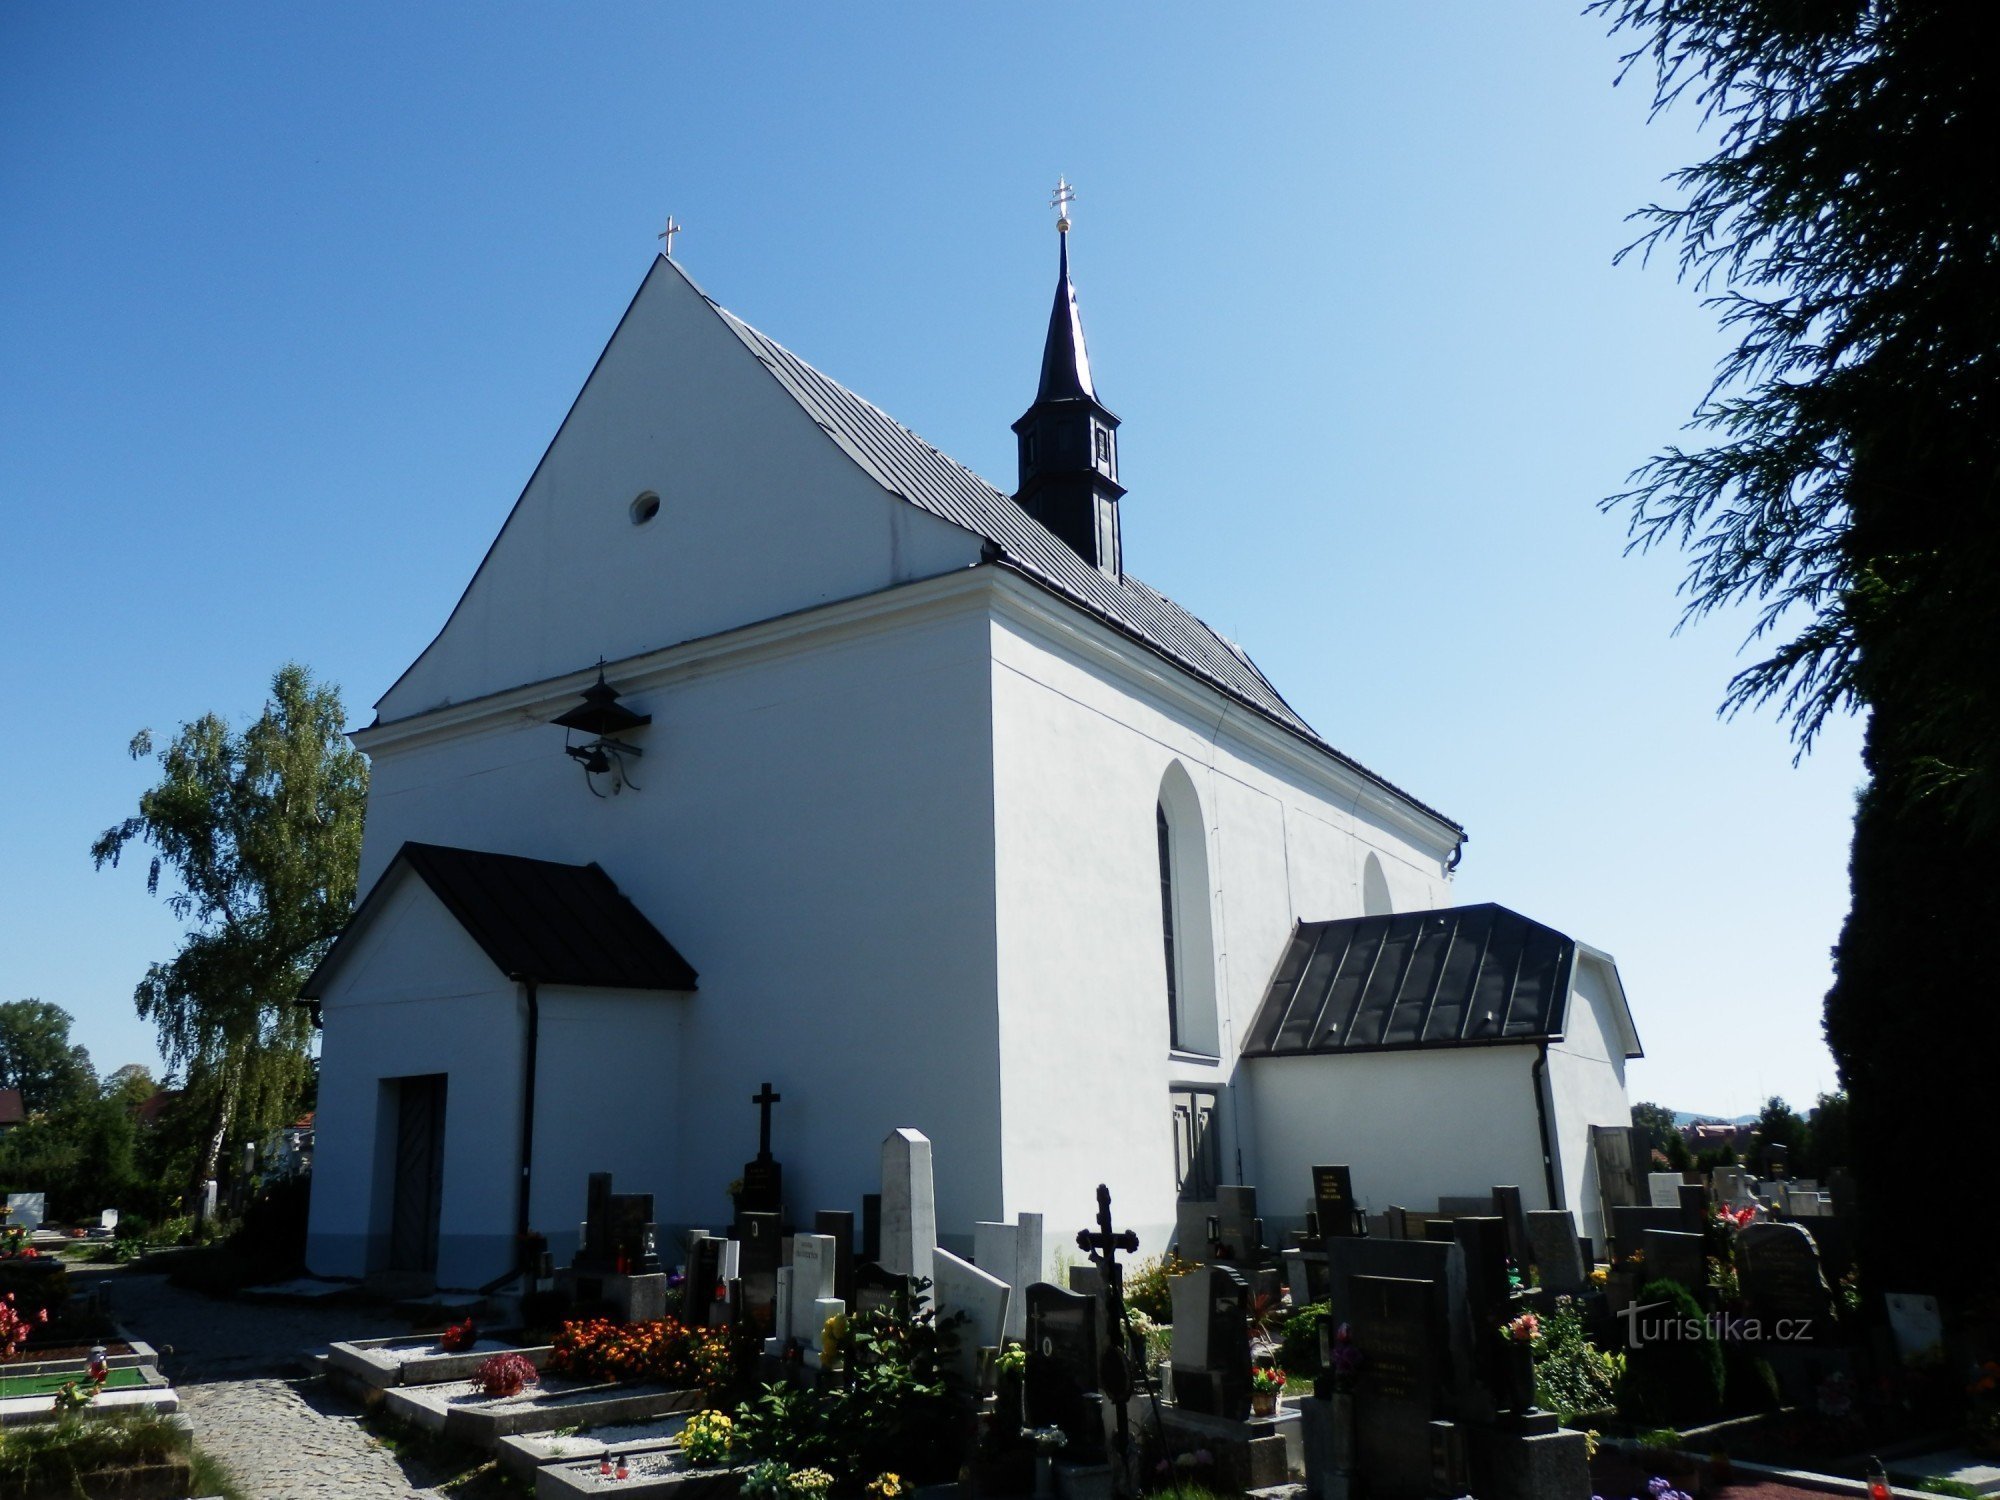 Church of the Holy Trinity in Bystřice nad Pernštejnem